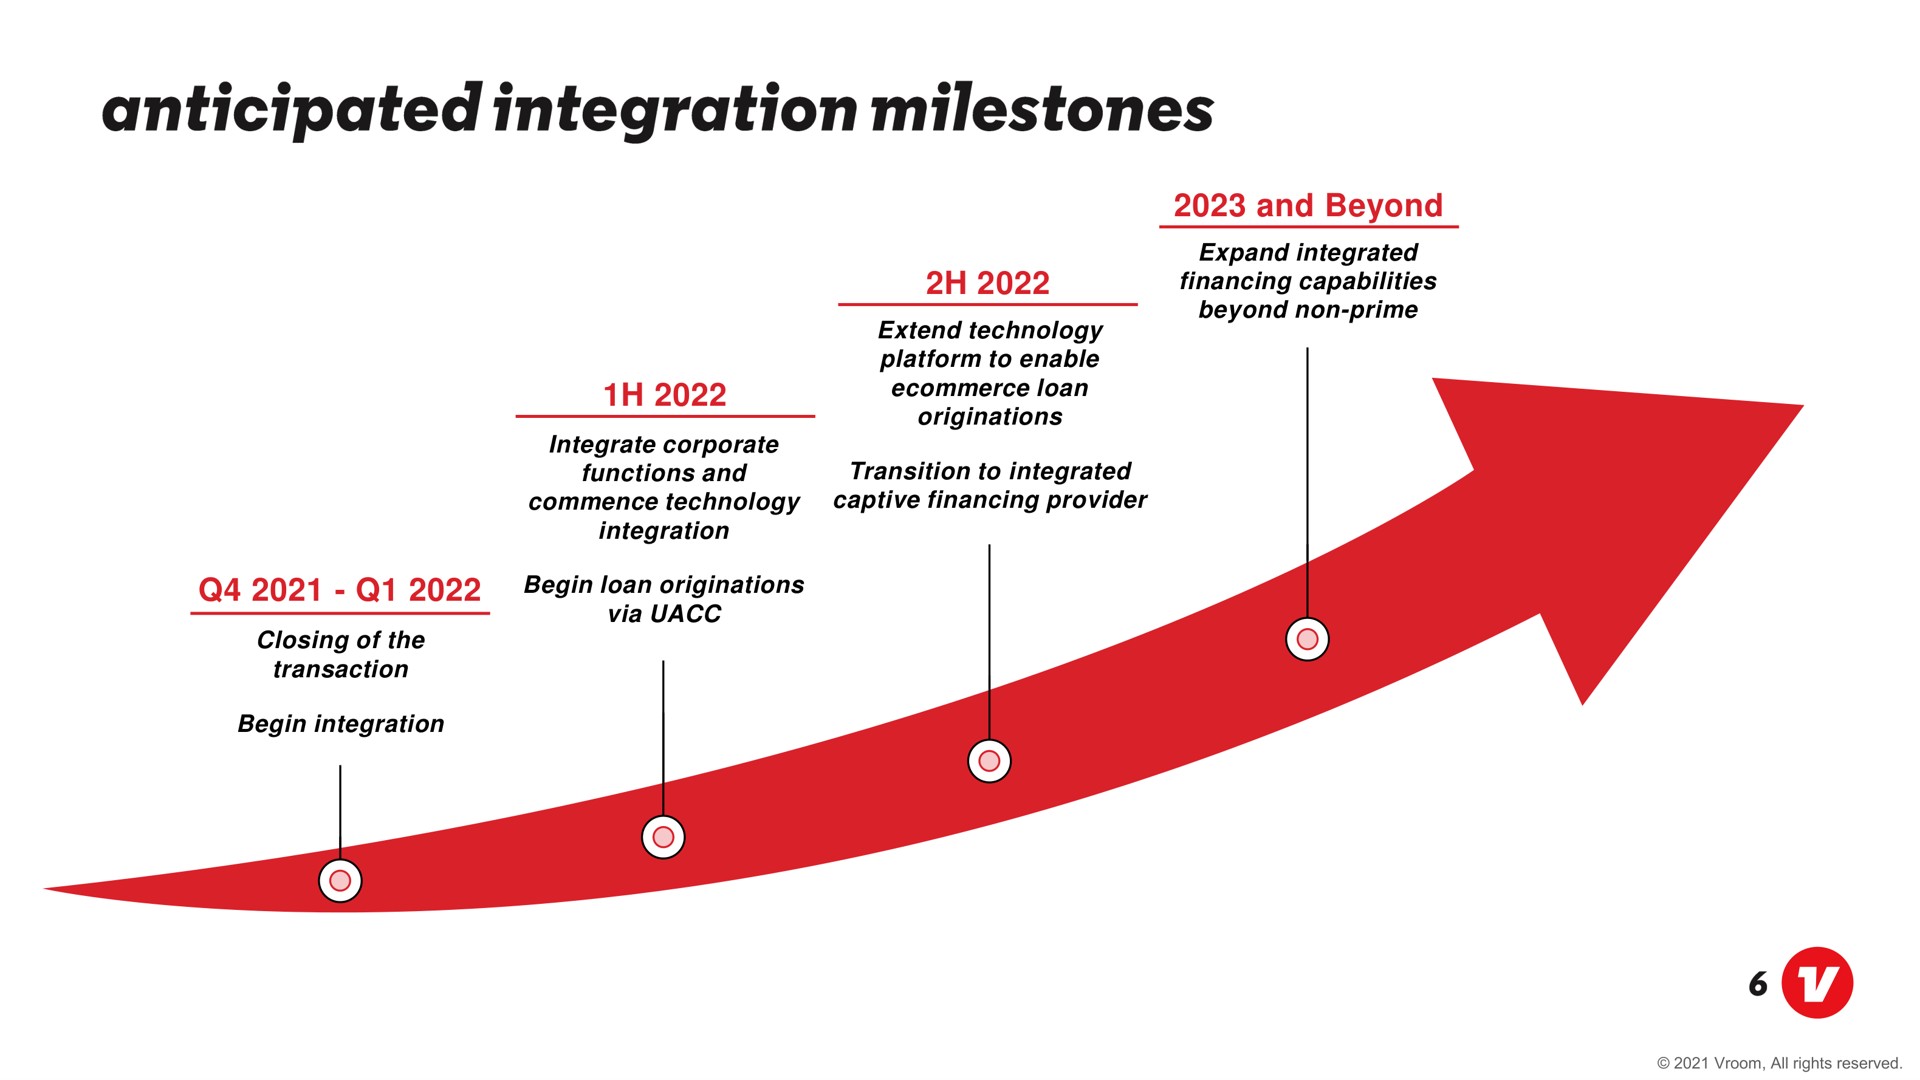 and beyond anticipated integration milestones go | Vroom